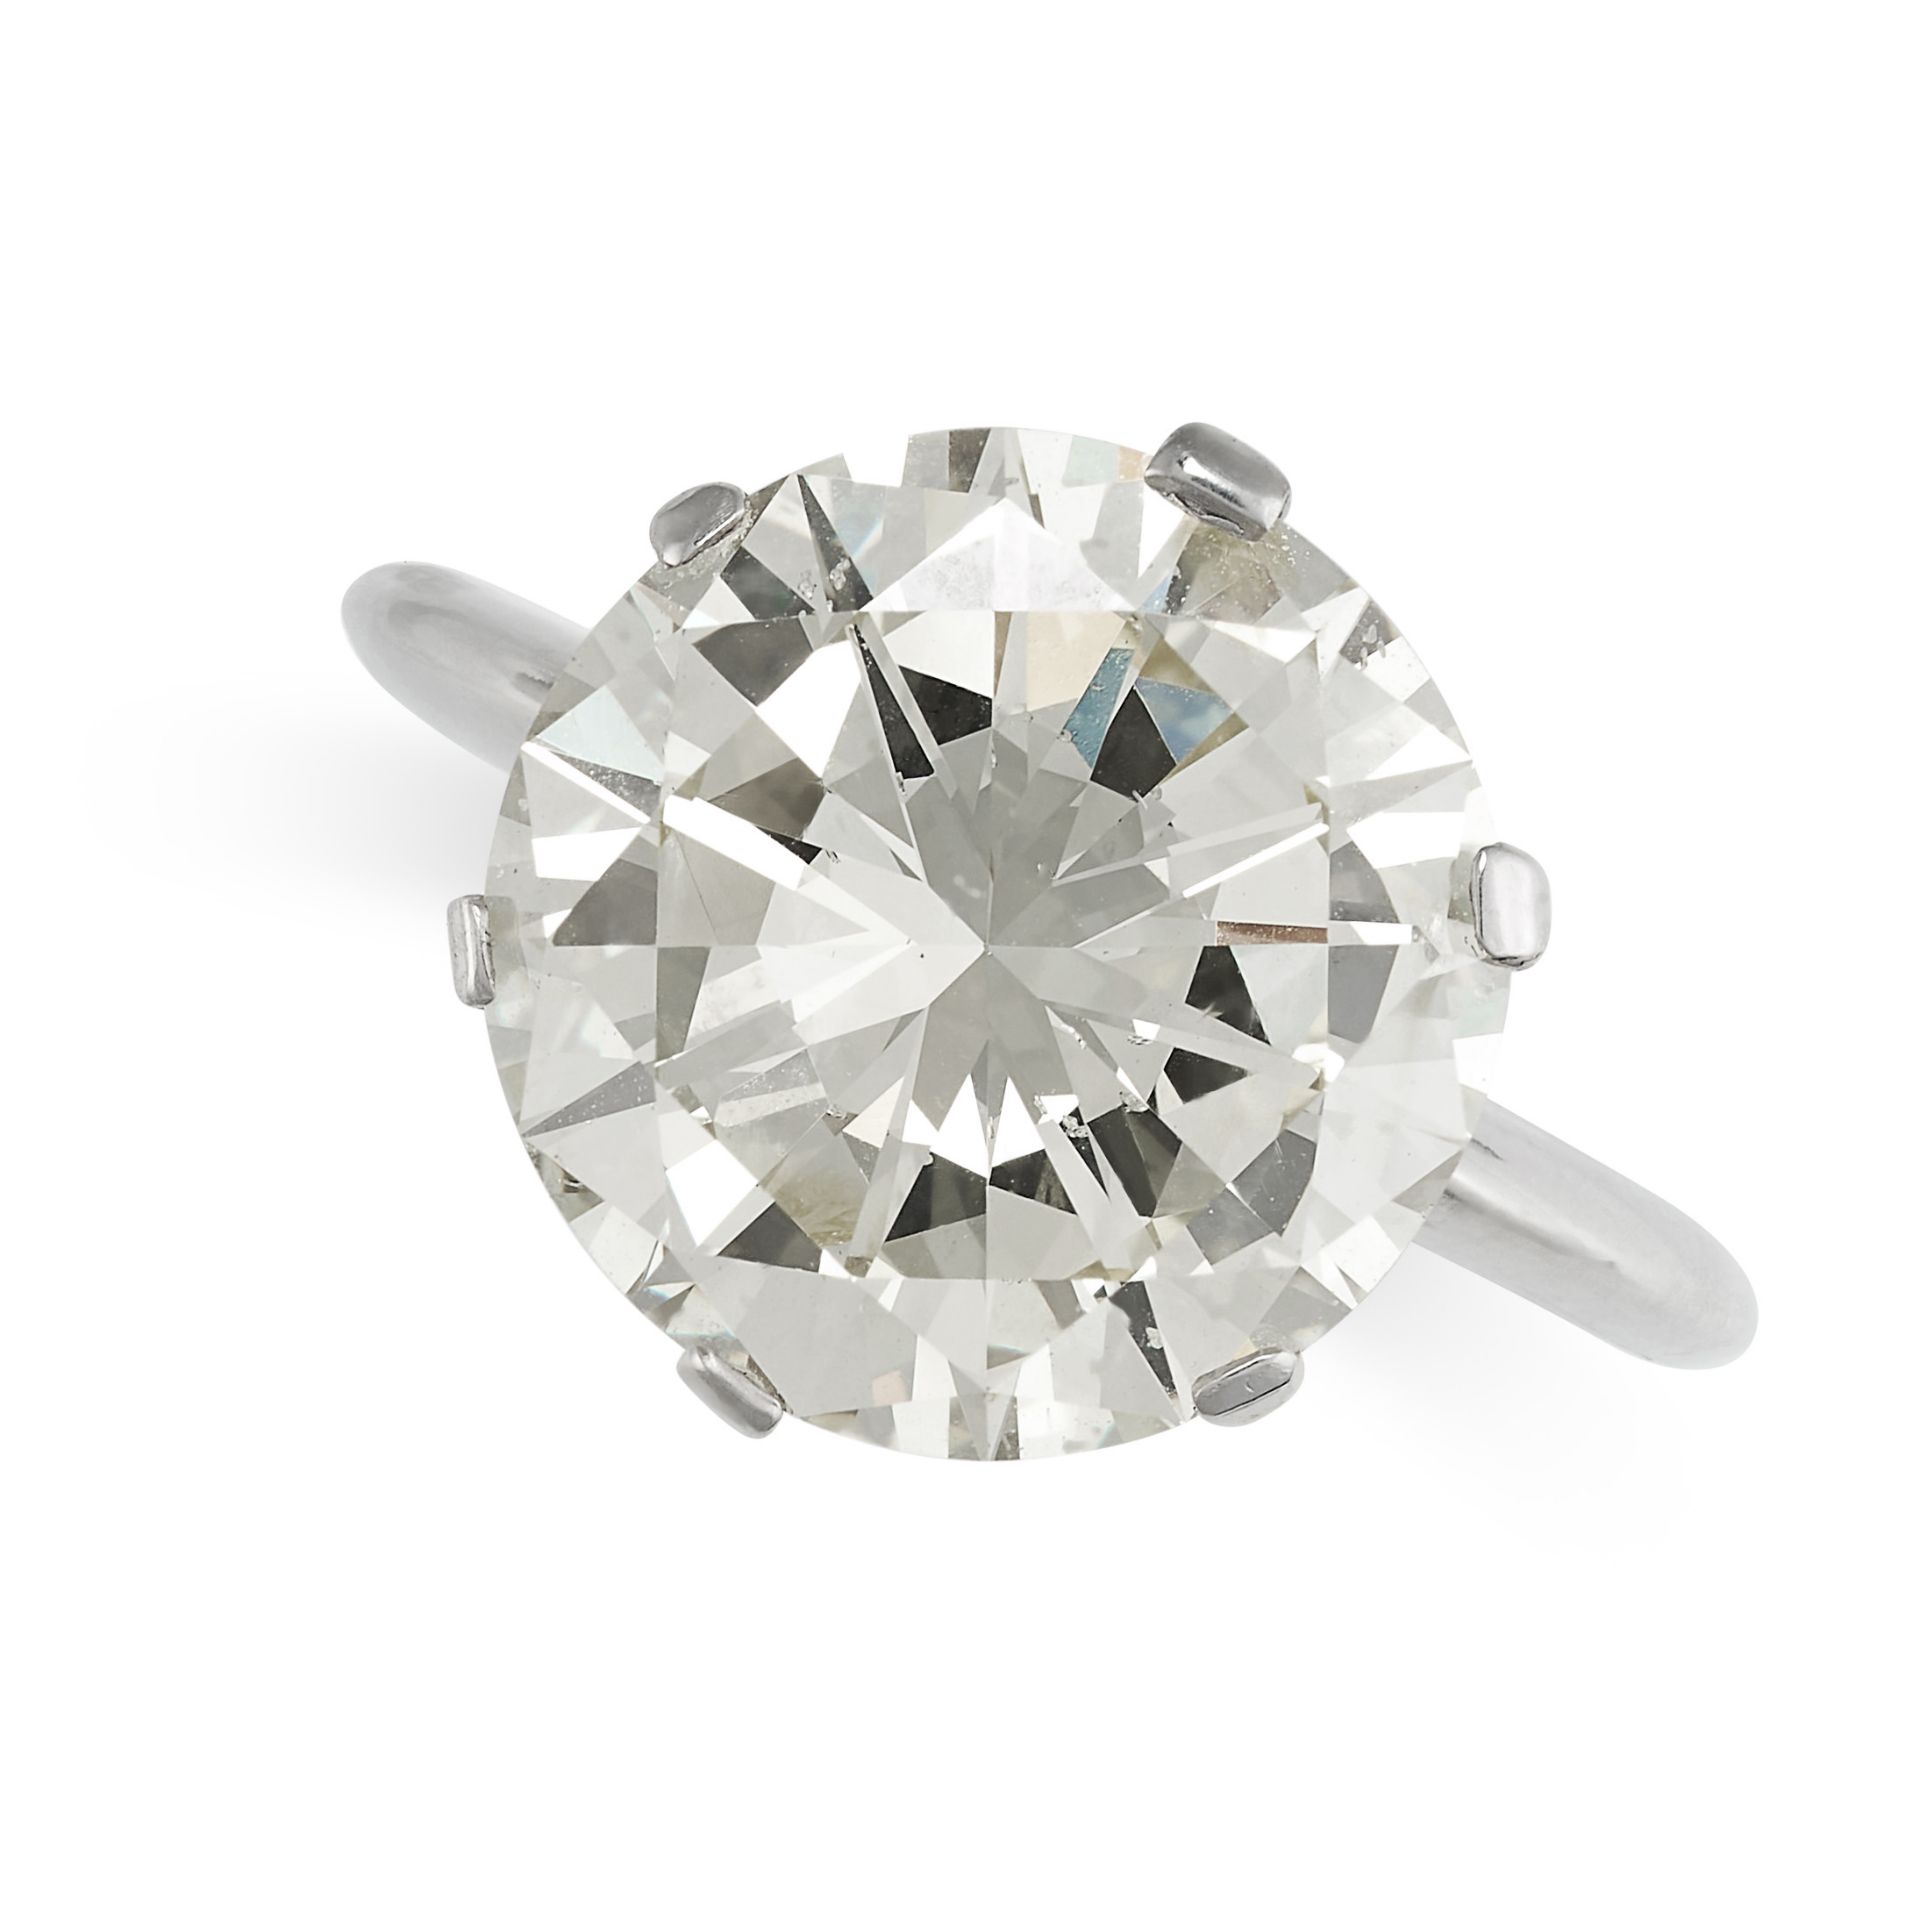 AN IMPRESSIVE 9.02 CARAT SOLITAIRE DIAMOND RING in platinum, set with a round brilliant cut